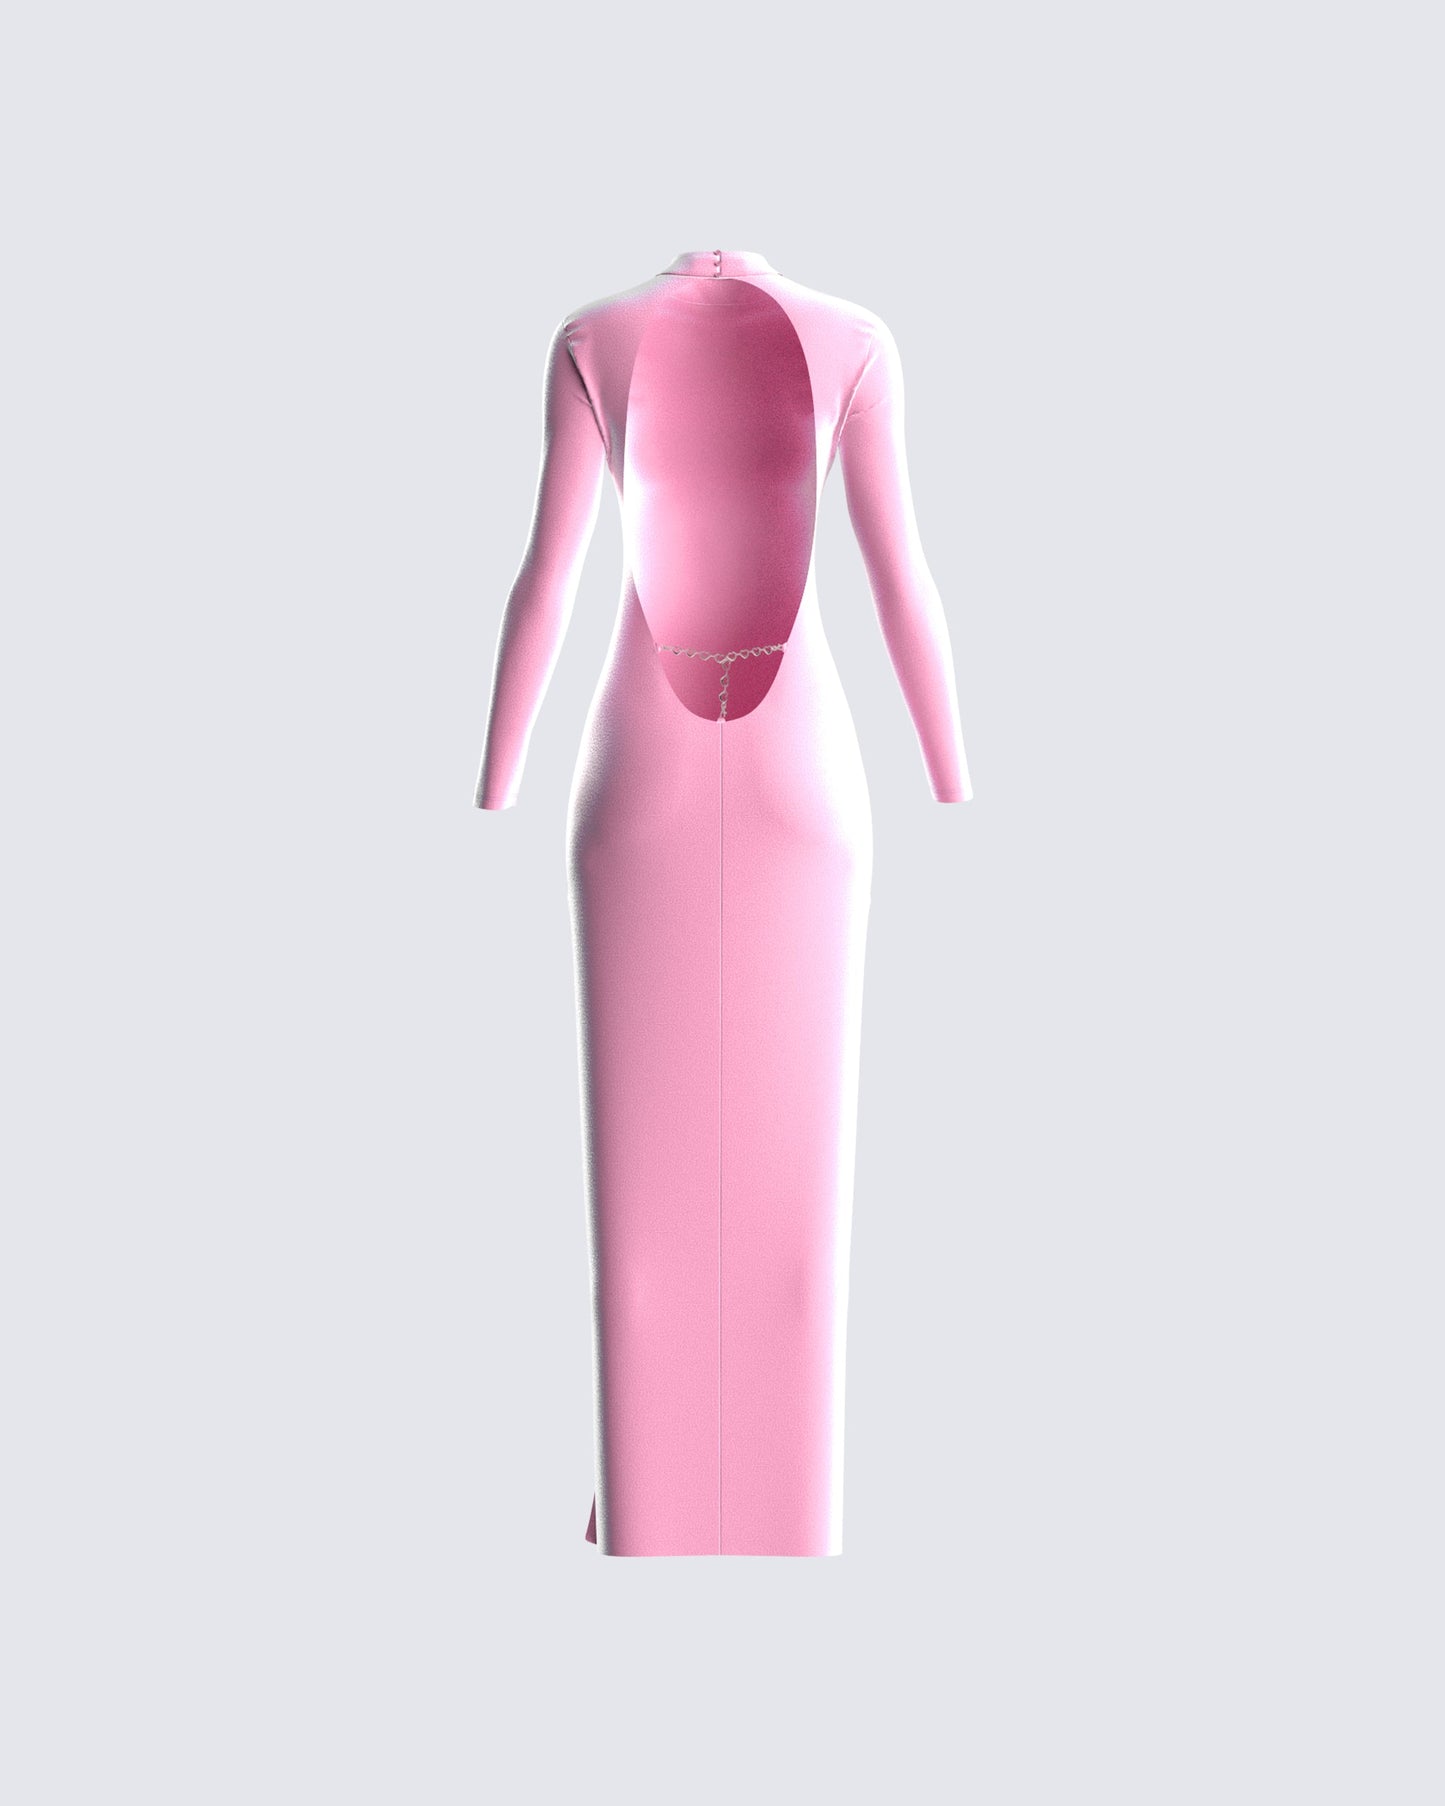 Eira Pink Backless Midi Dress